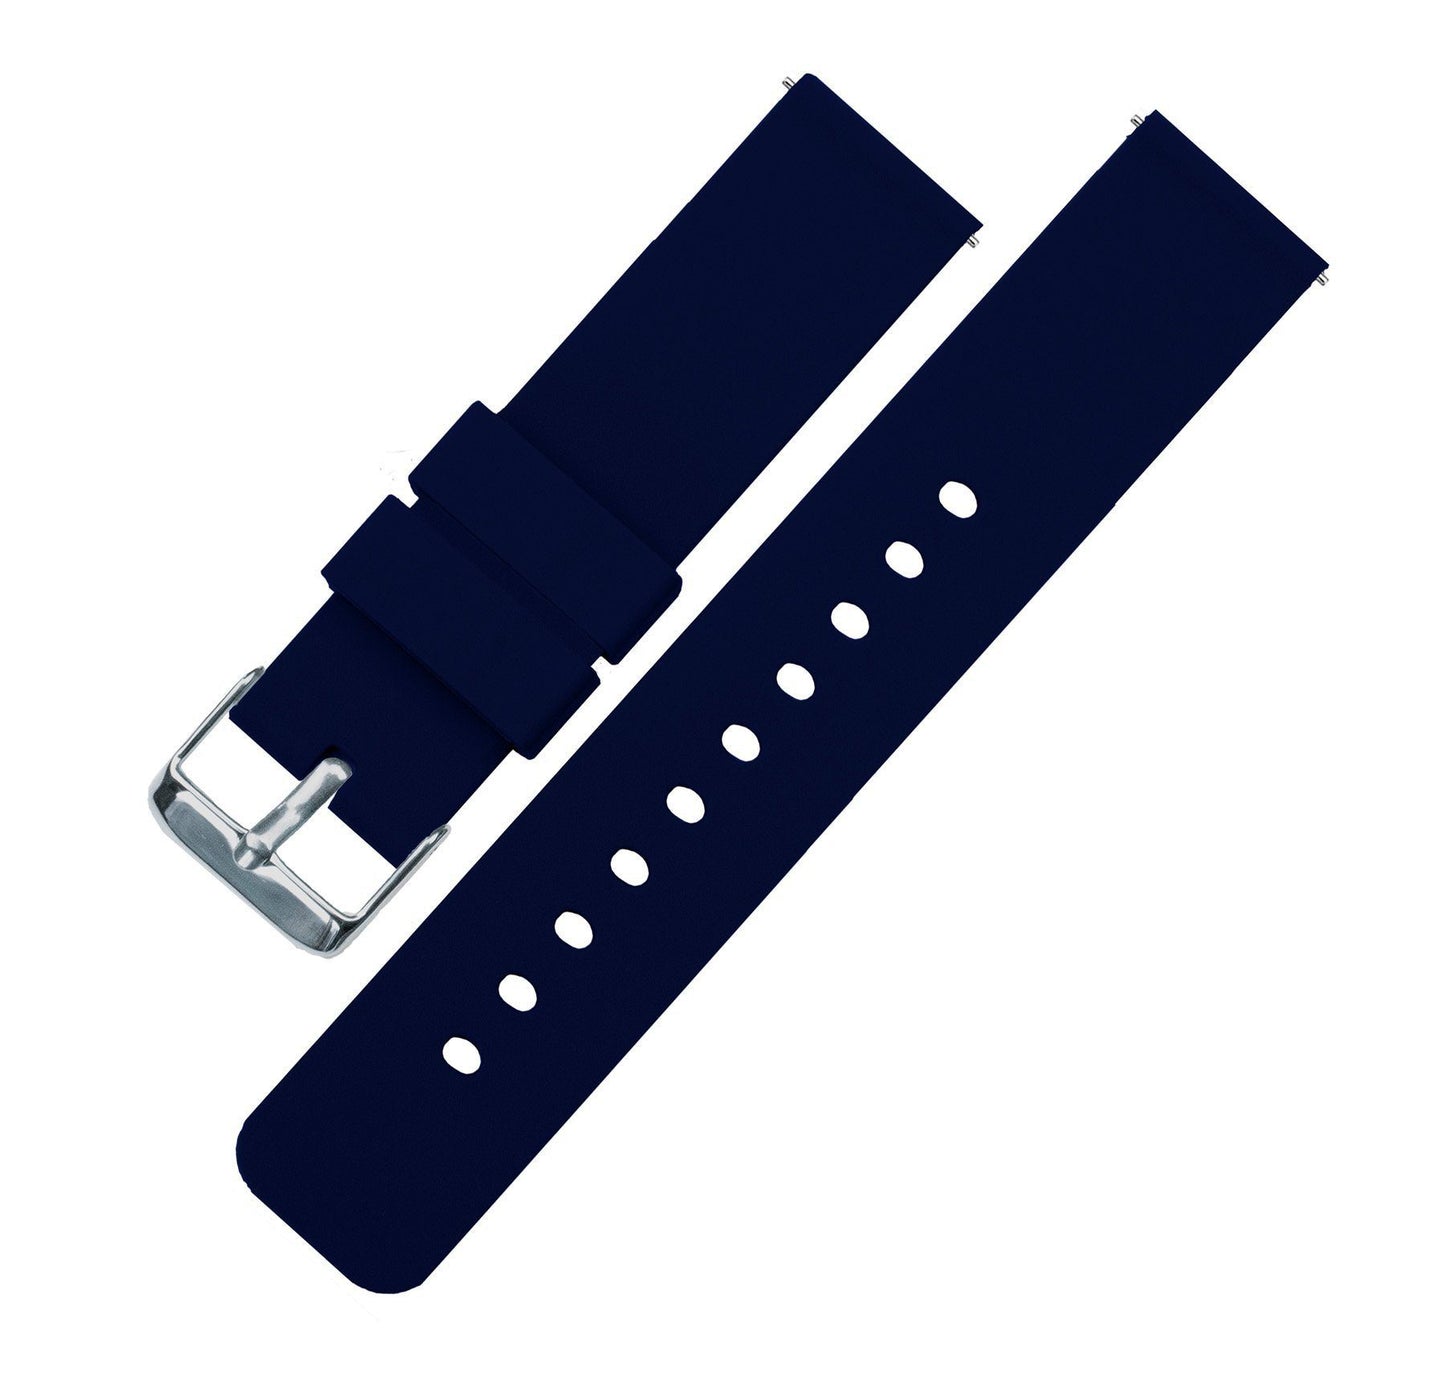 Samsung Galaxy Watch  | Silicone | Navy Blue - Barton Watch Bands